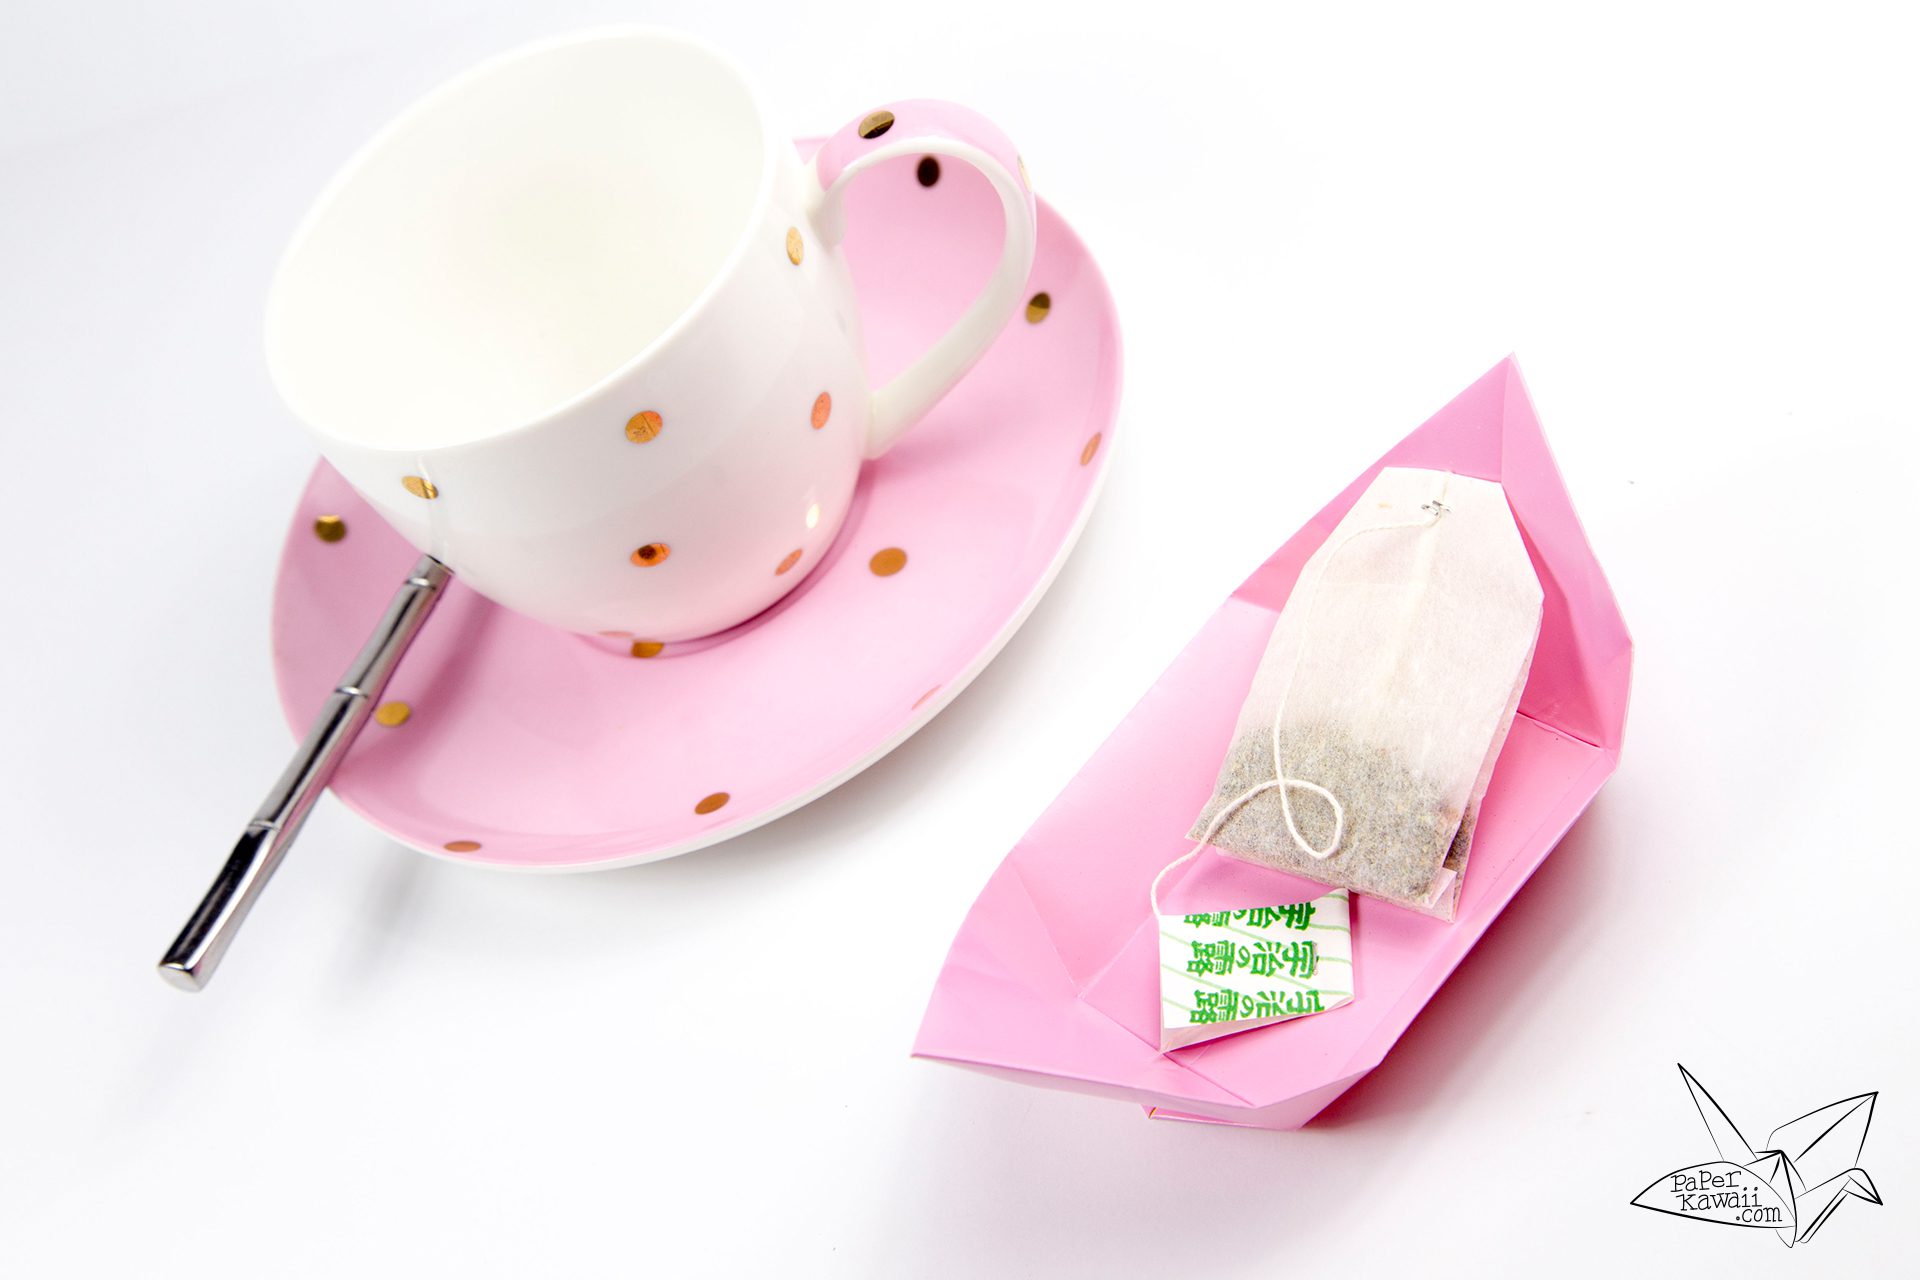 Traditional Origami Tea Plate Tutorial